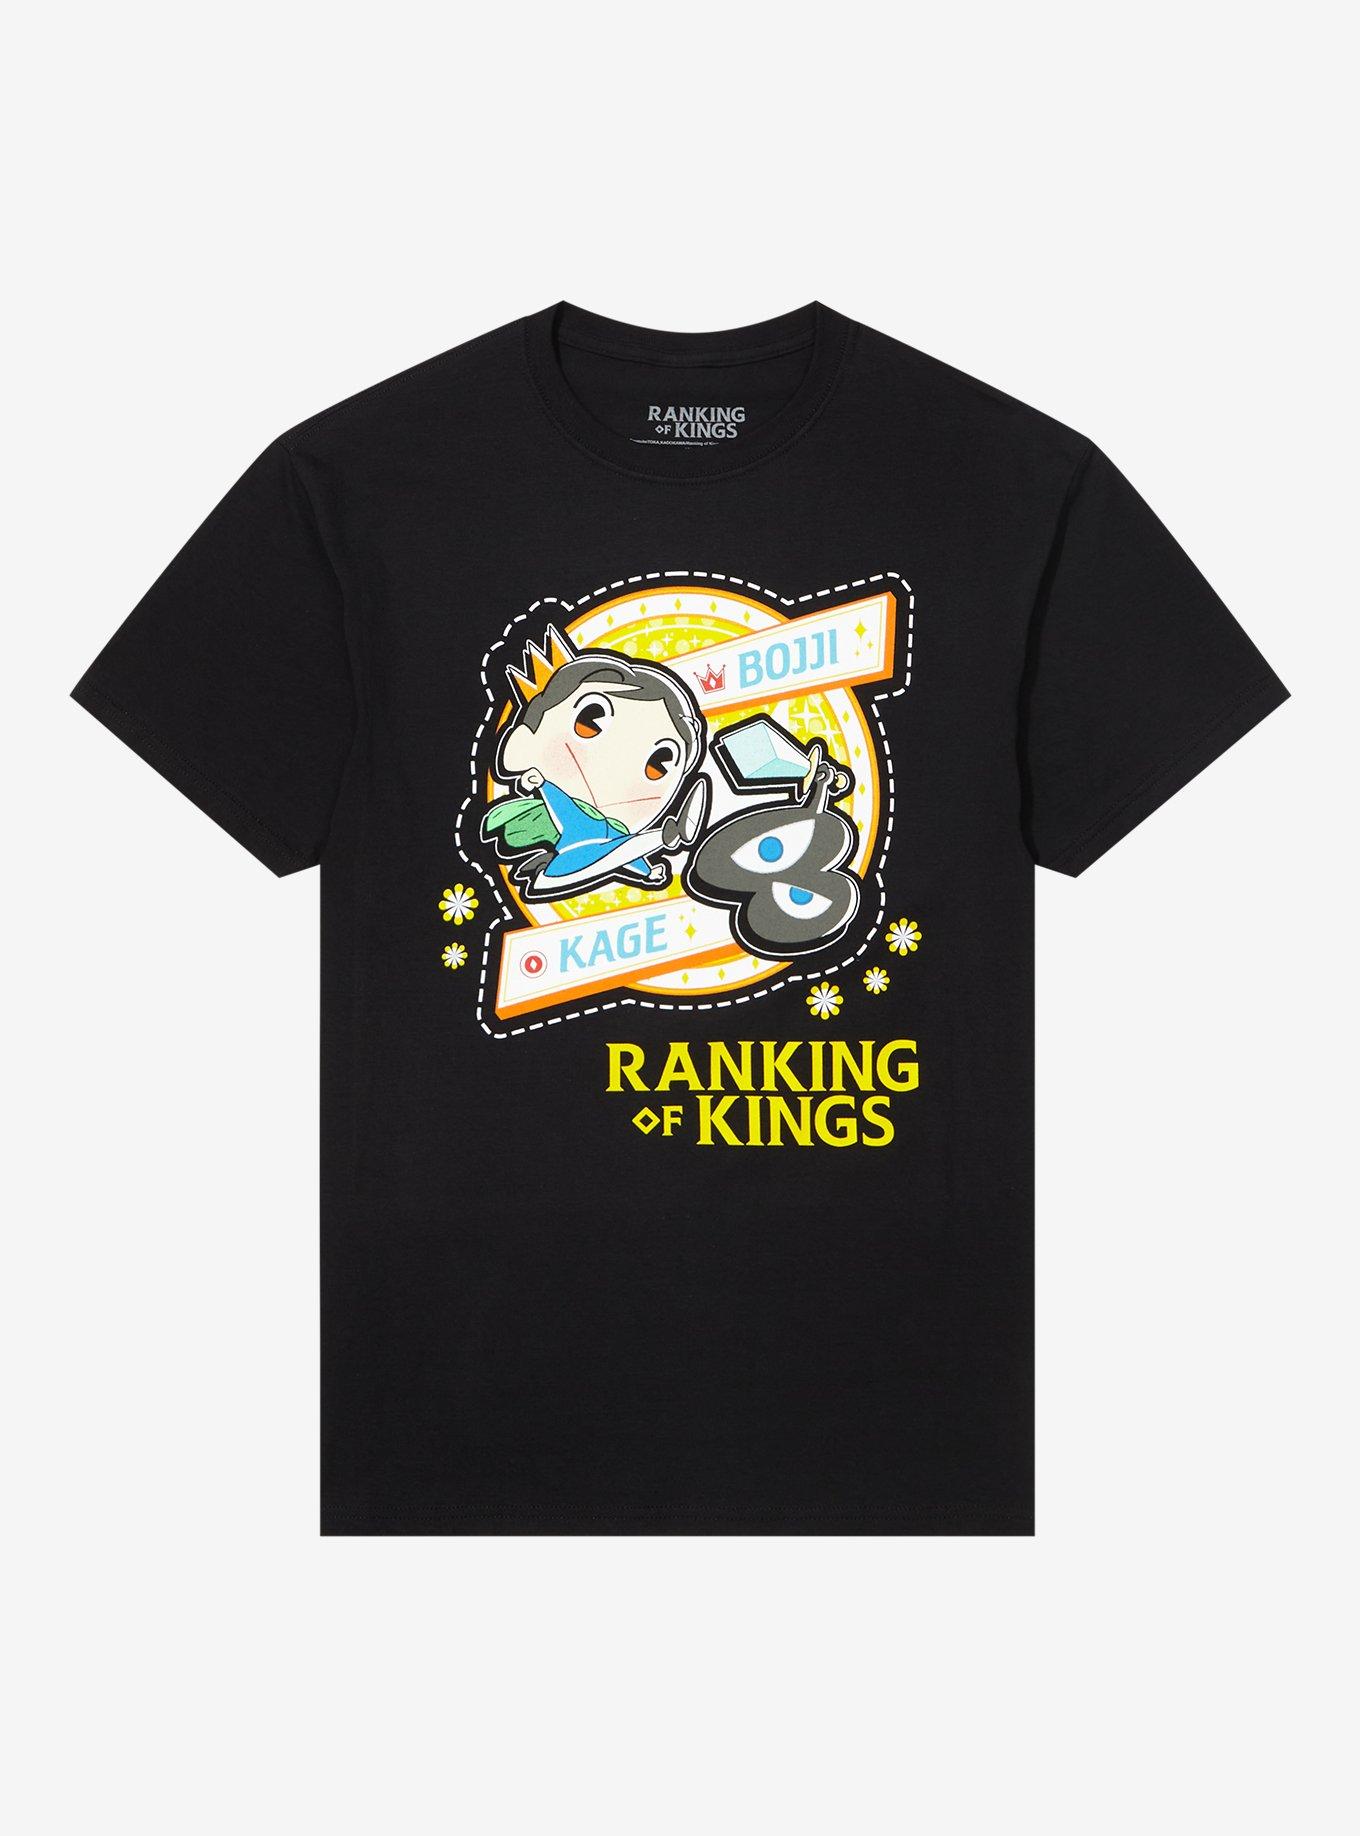 Ranking Of Kings T-Shirt,Ousama Ranking,Bojji,Kage,Apeas,Hiling Shirt All  Size